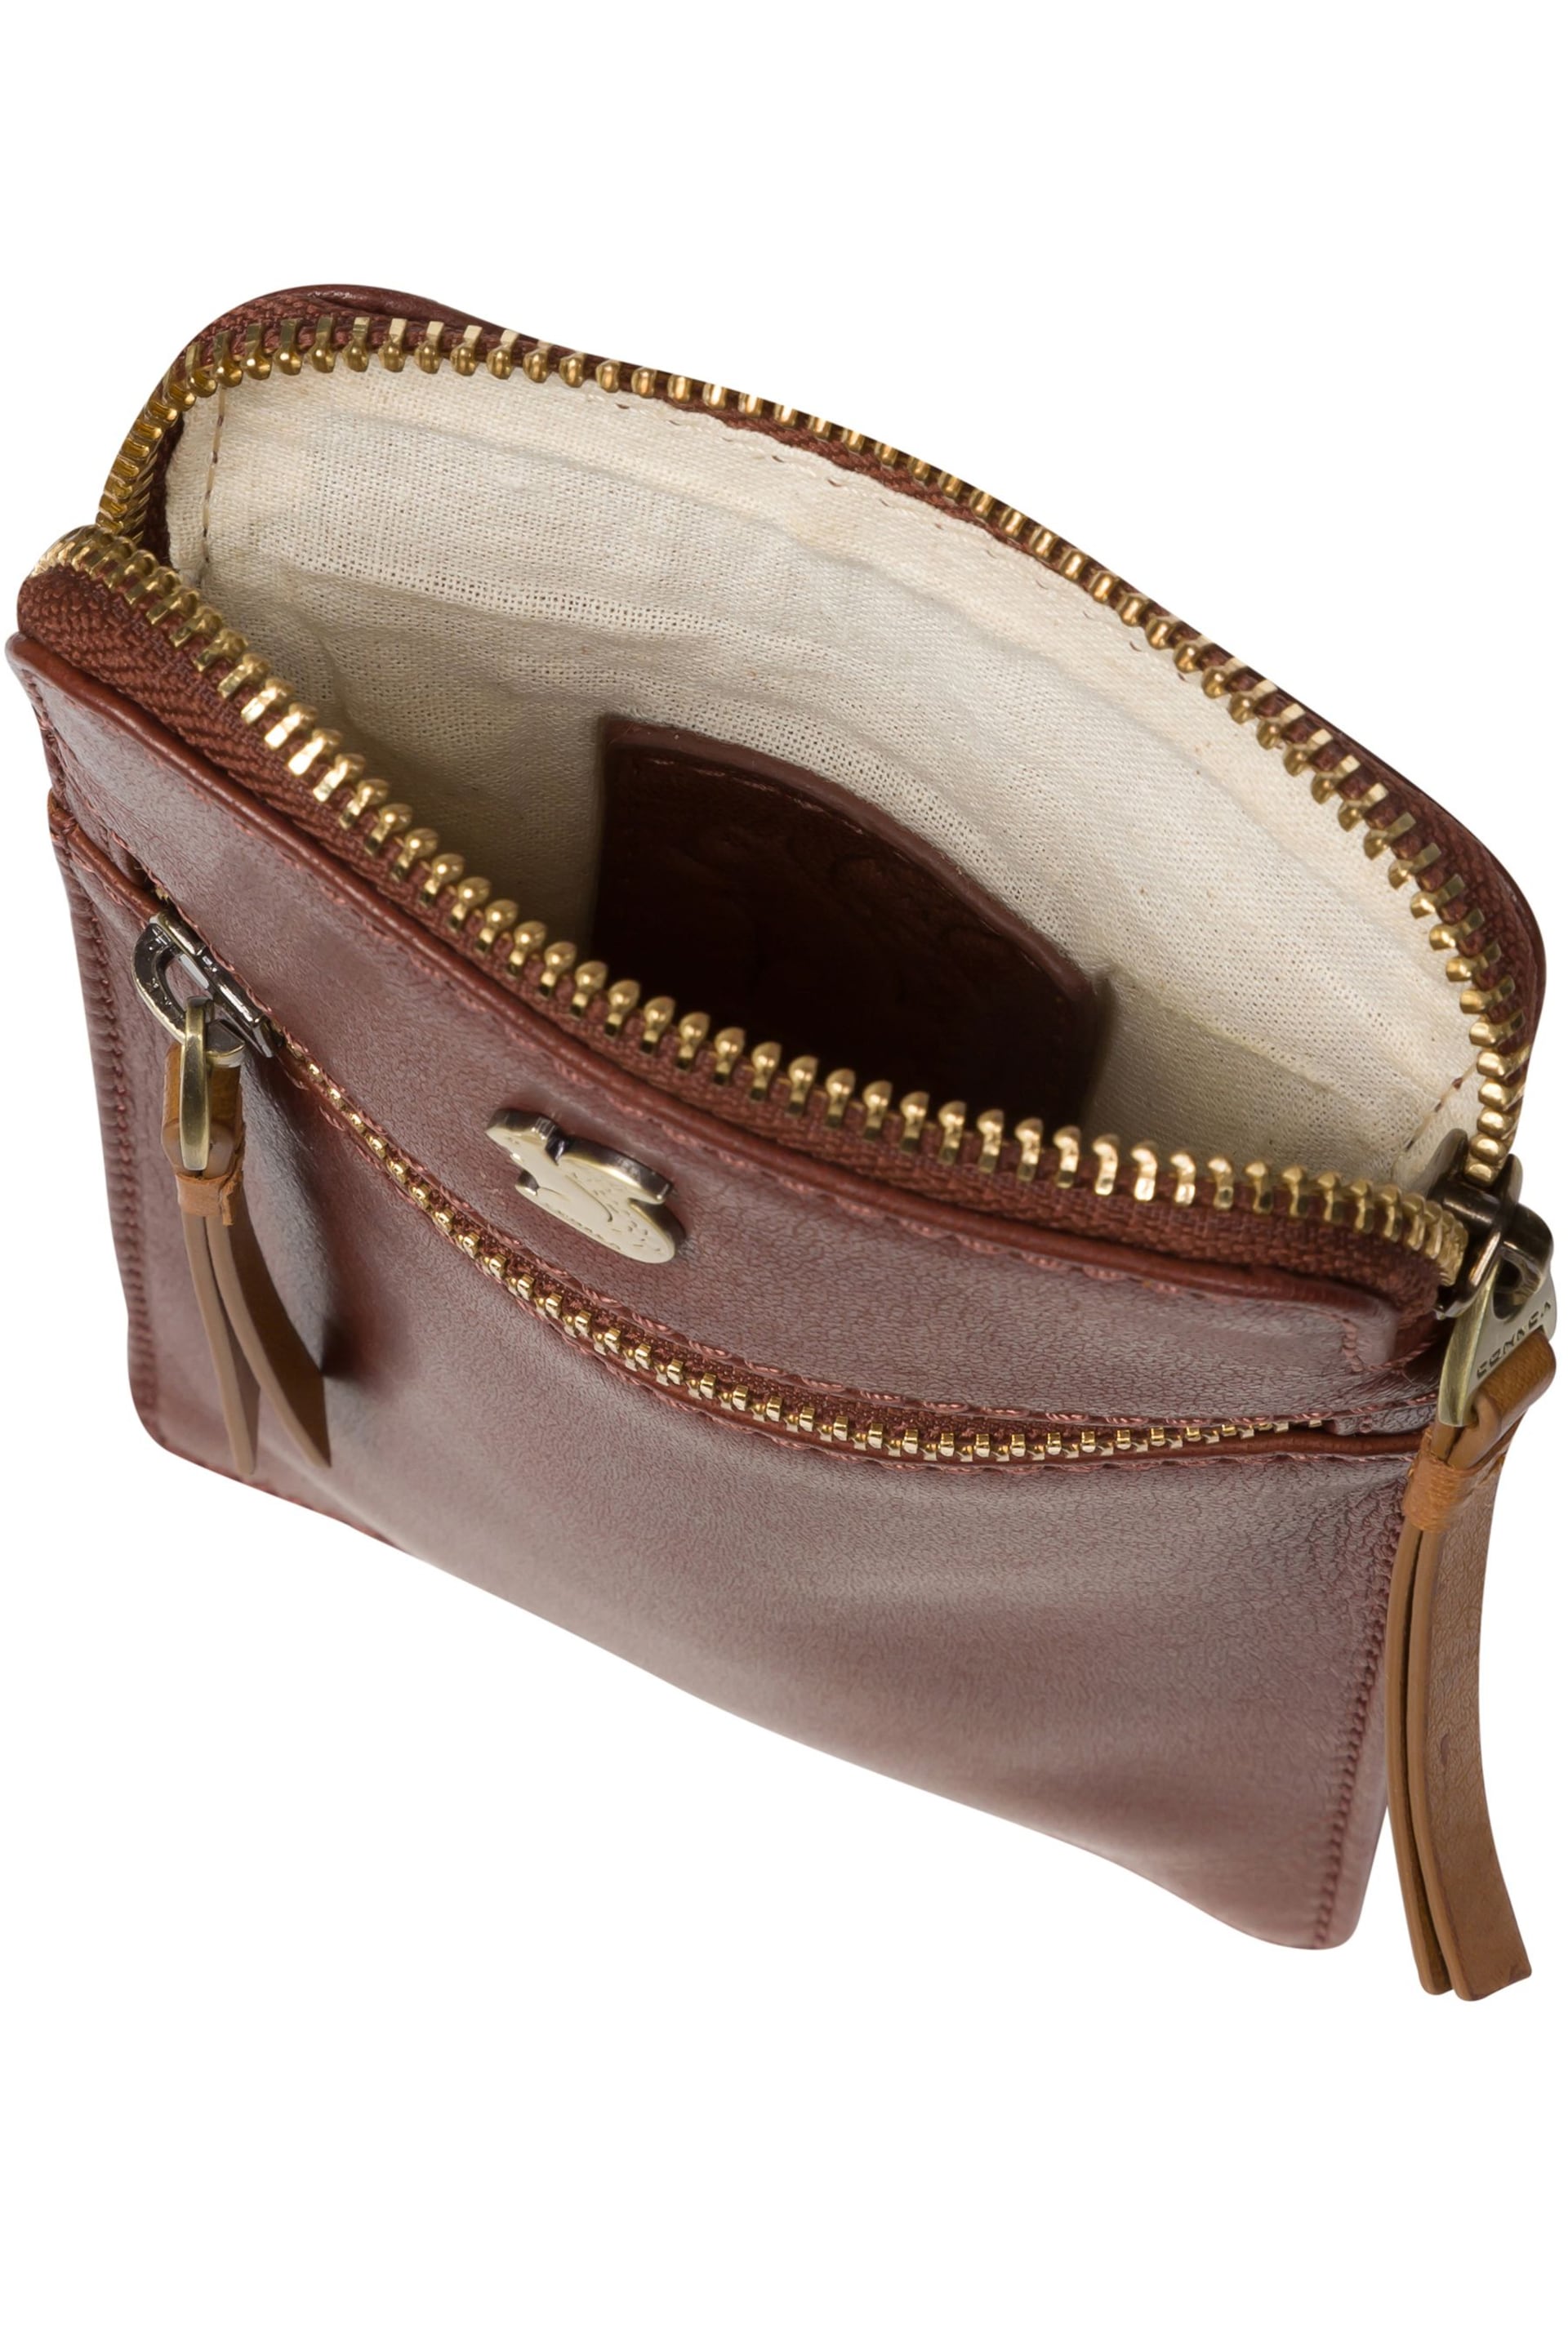 Conkca Bambino Leather Cross-Body Phone Bag - Image 4 of 4